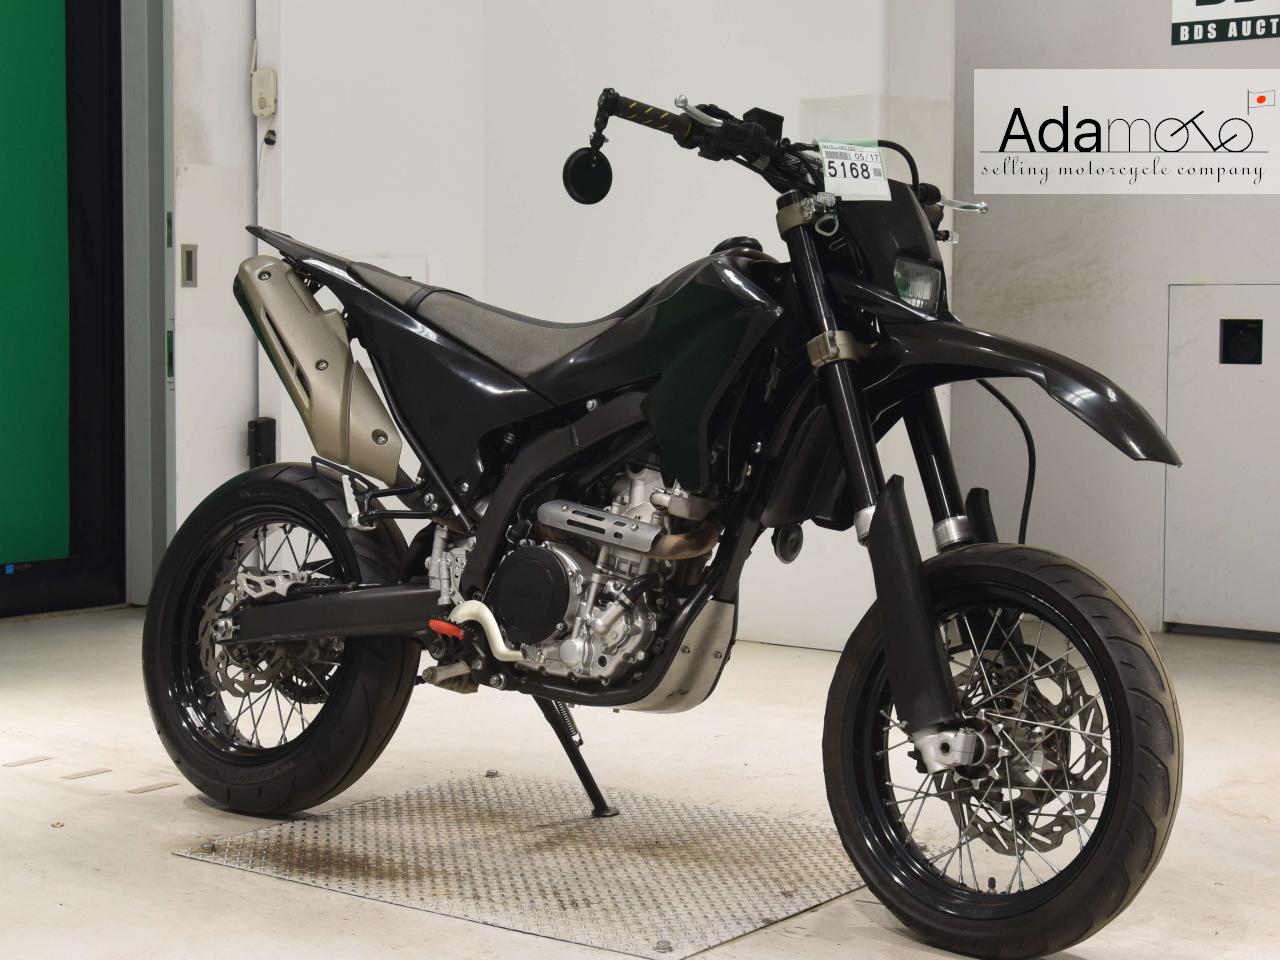 Yamaha WR250X - Adamoto - Motorcycles from Japan